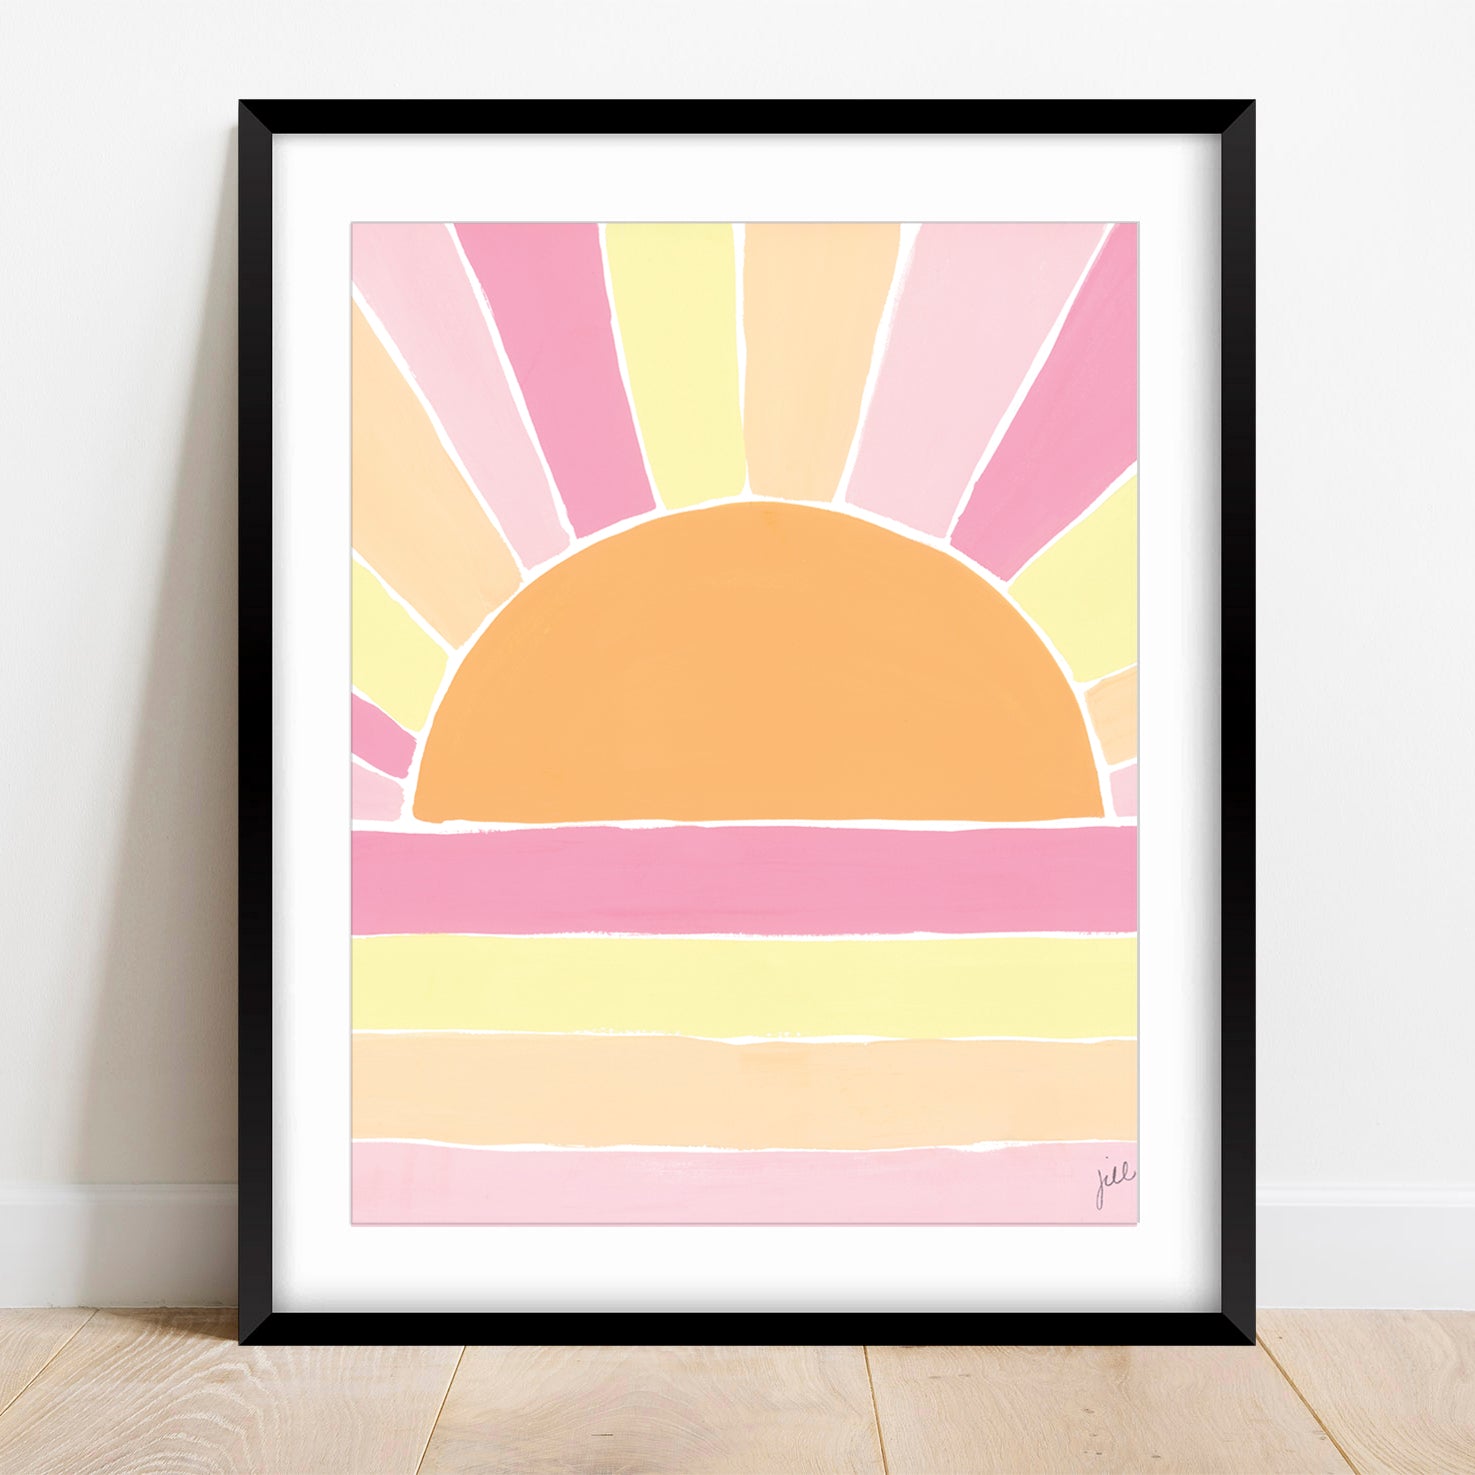 Retro Sun Art Print by Gert & Co